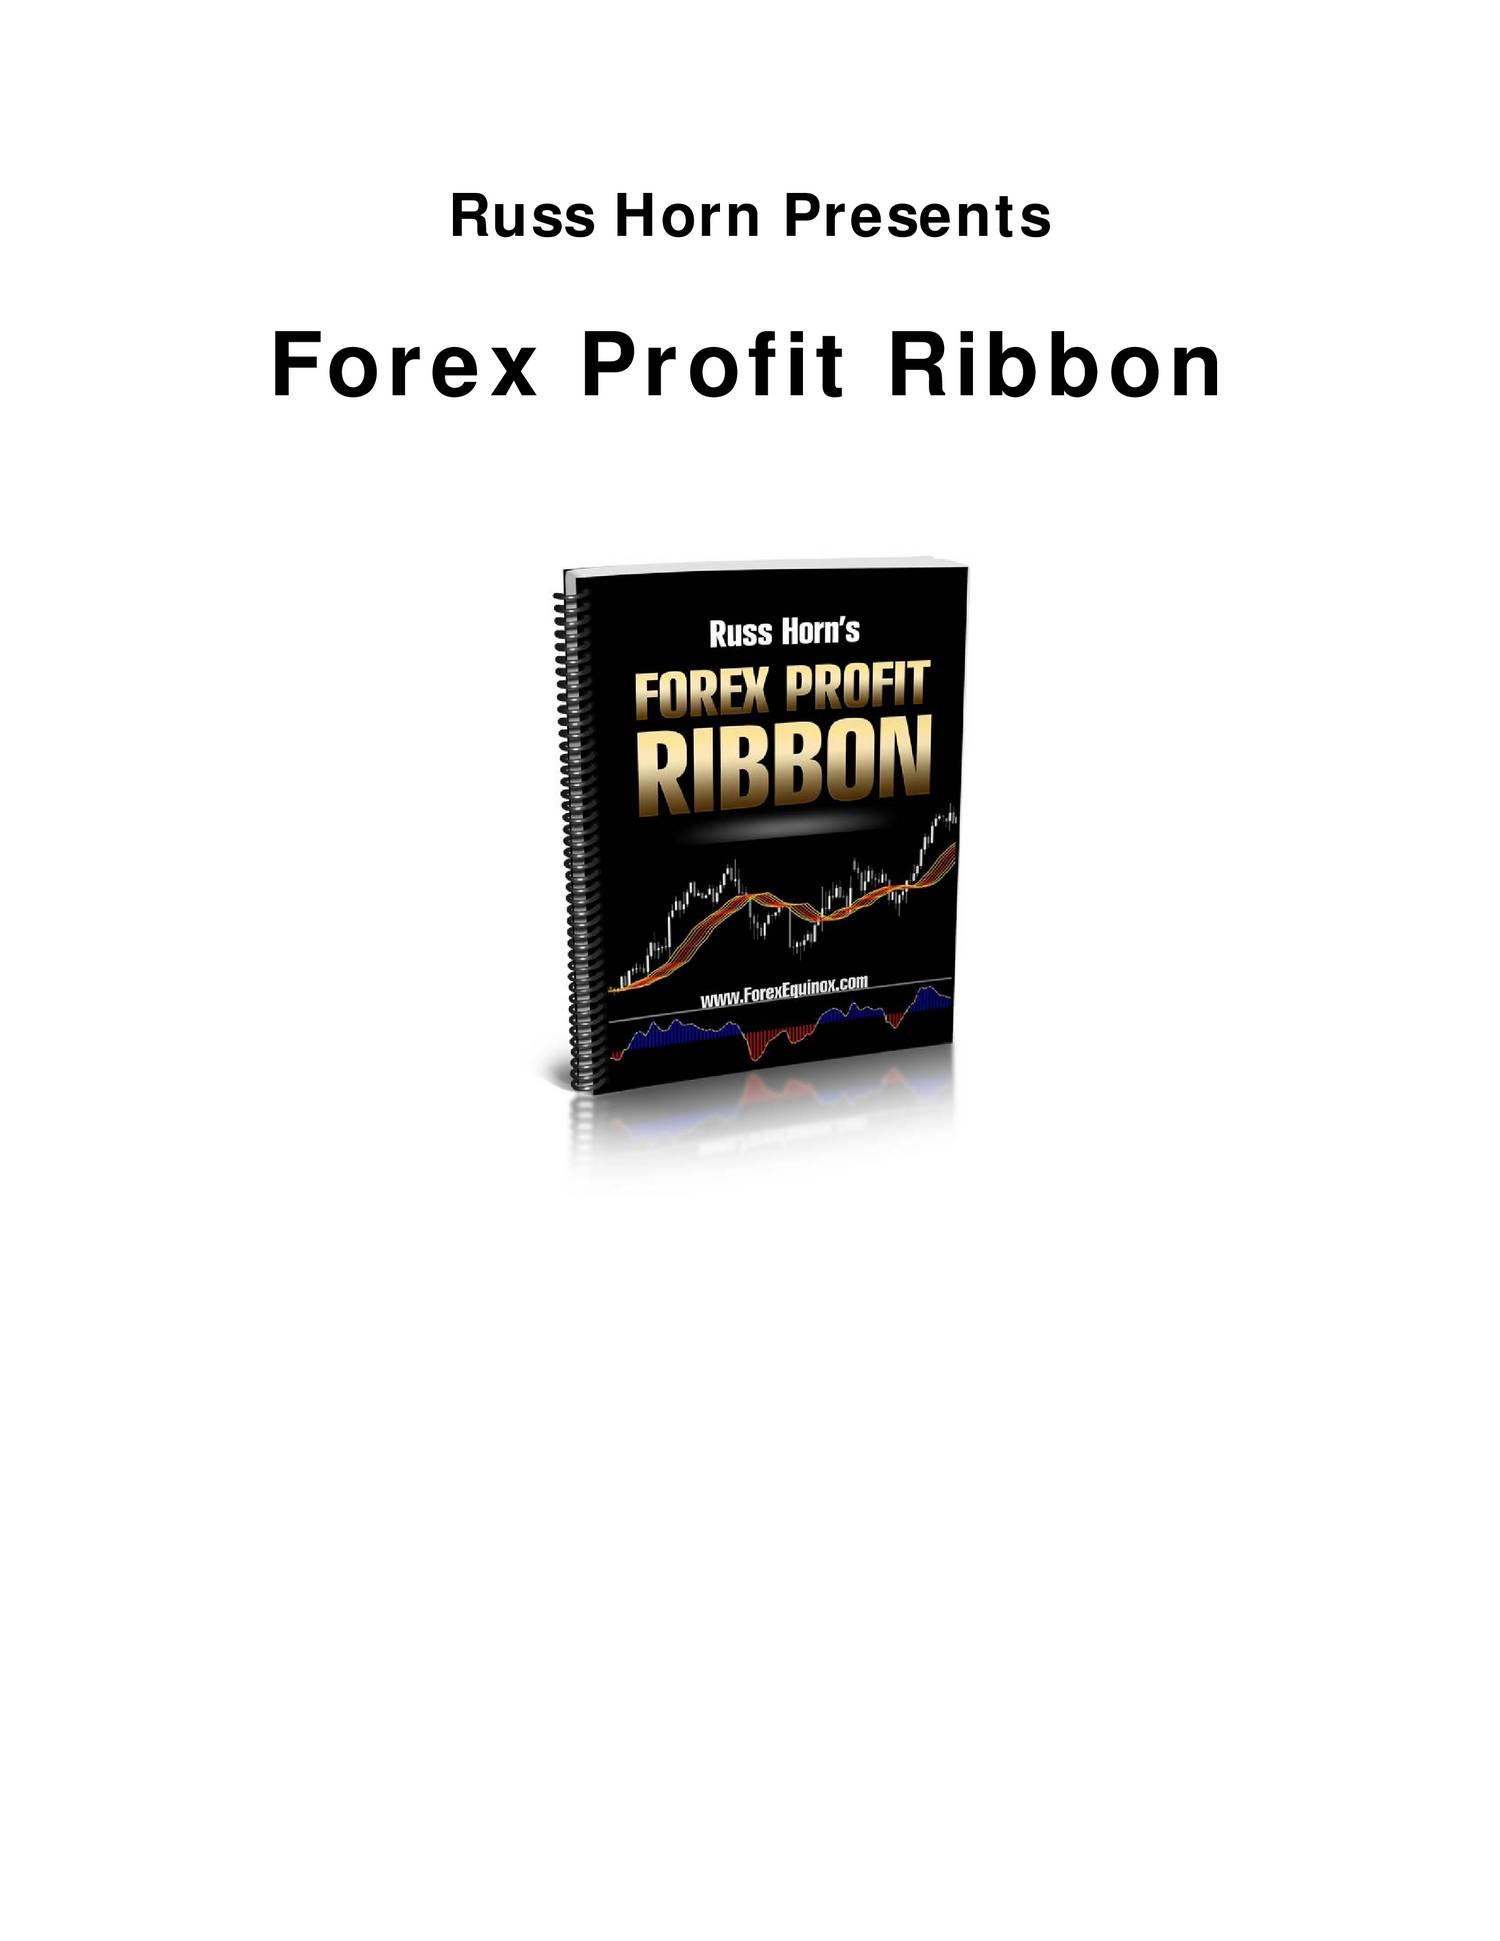 Forex profit ribbon